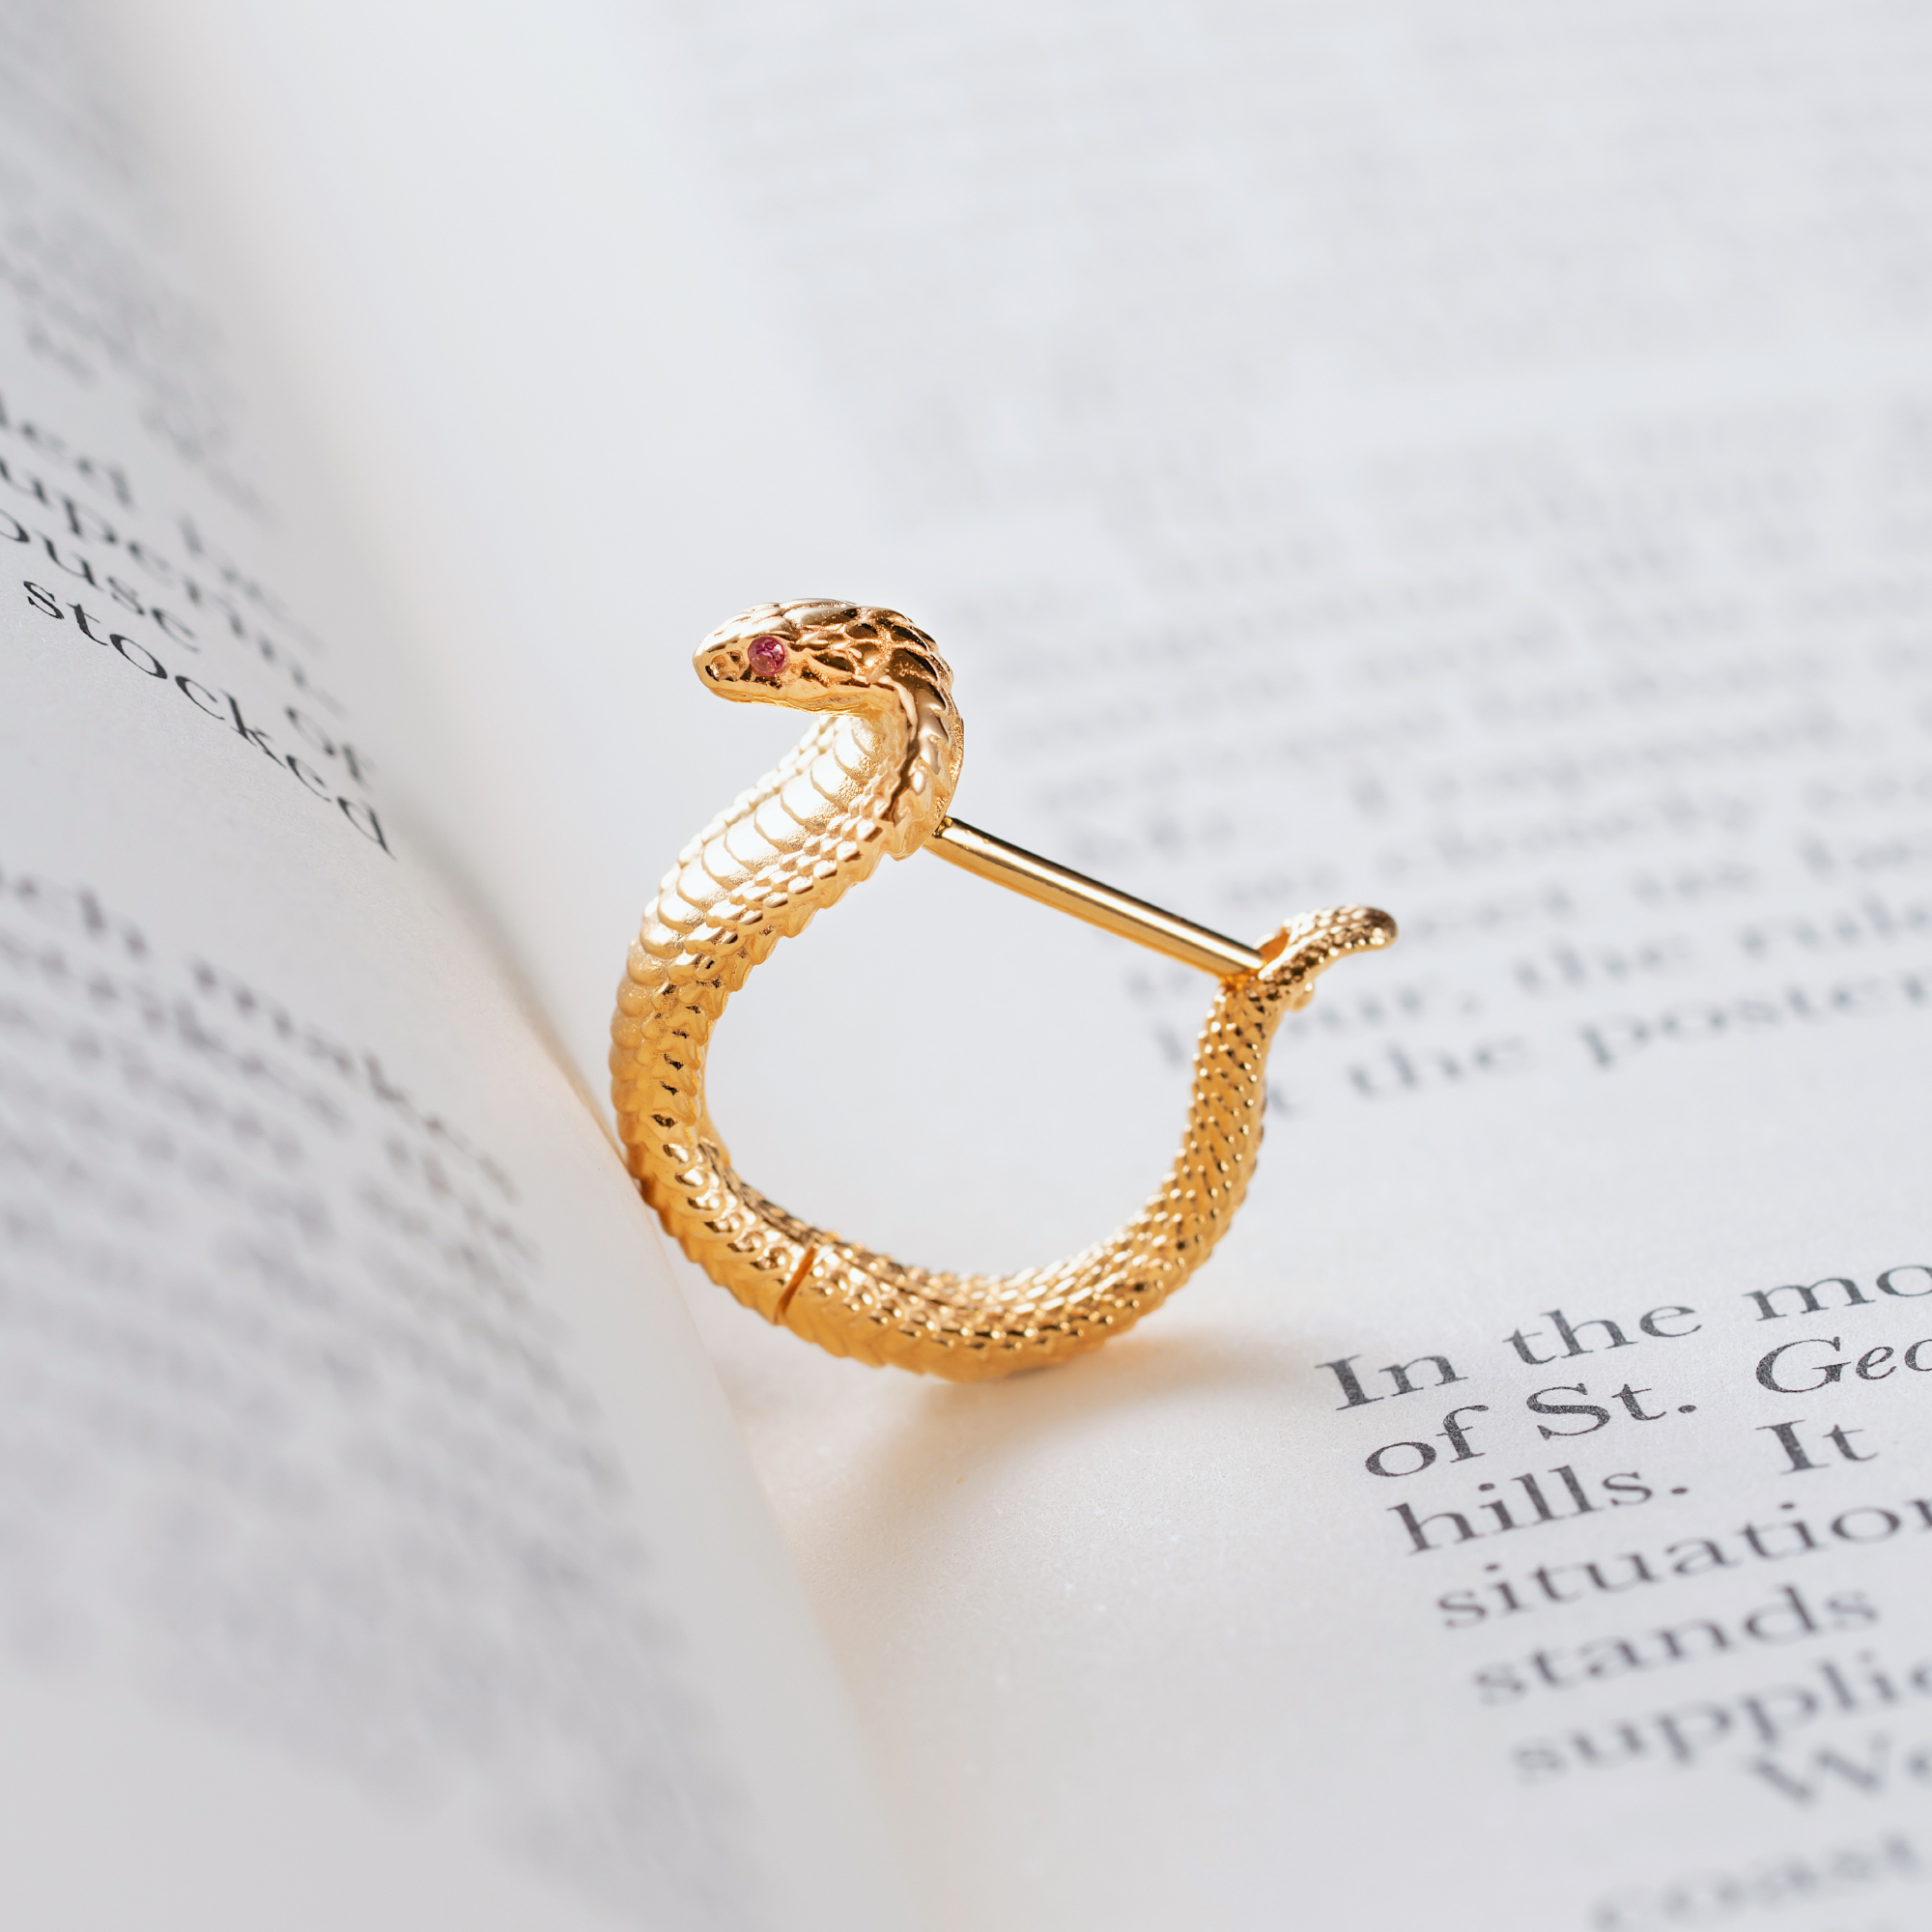 I designed a gold-plated cobra earring.